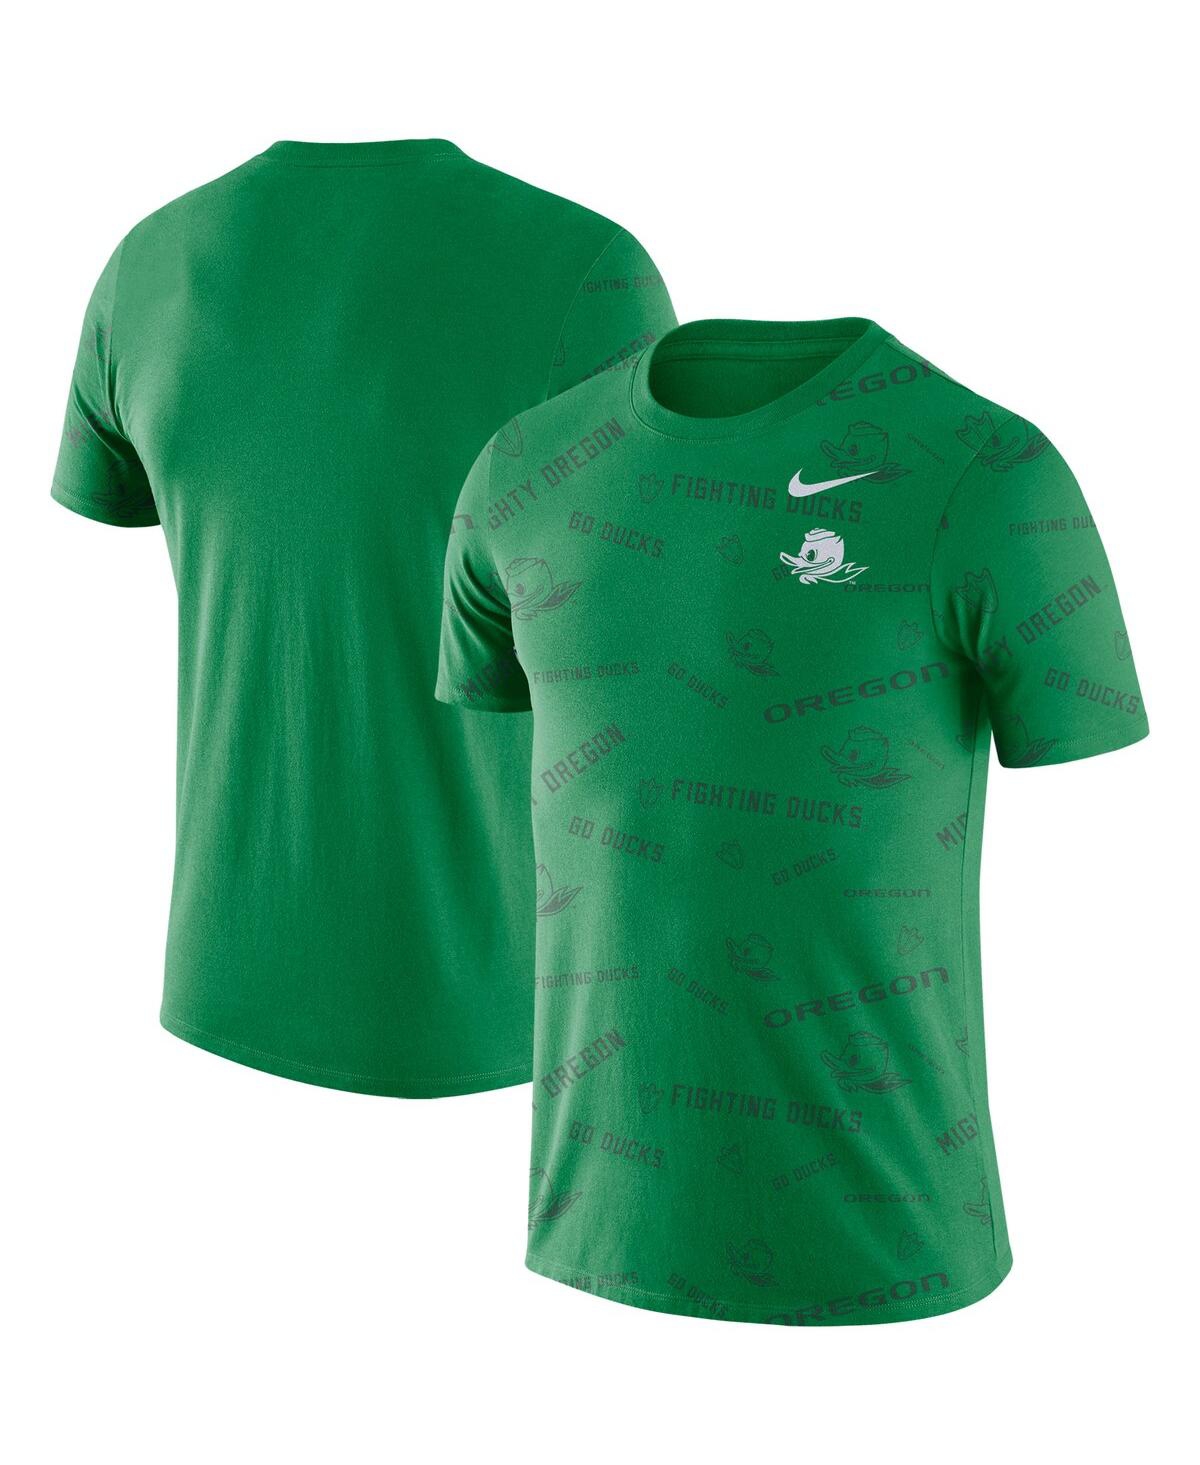 Men's Nike Green Oregon Ducks Tailgate T-shirt